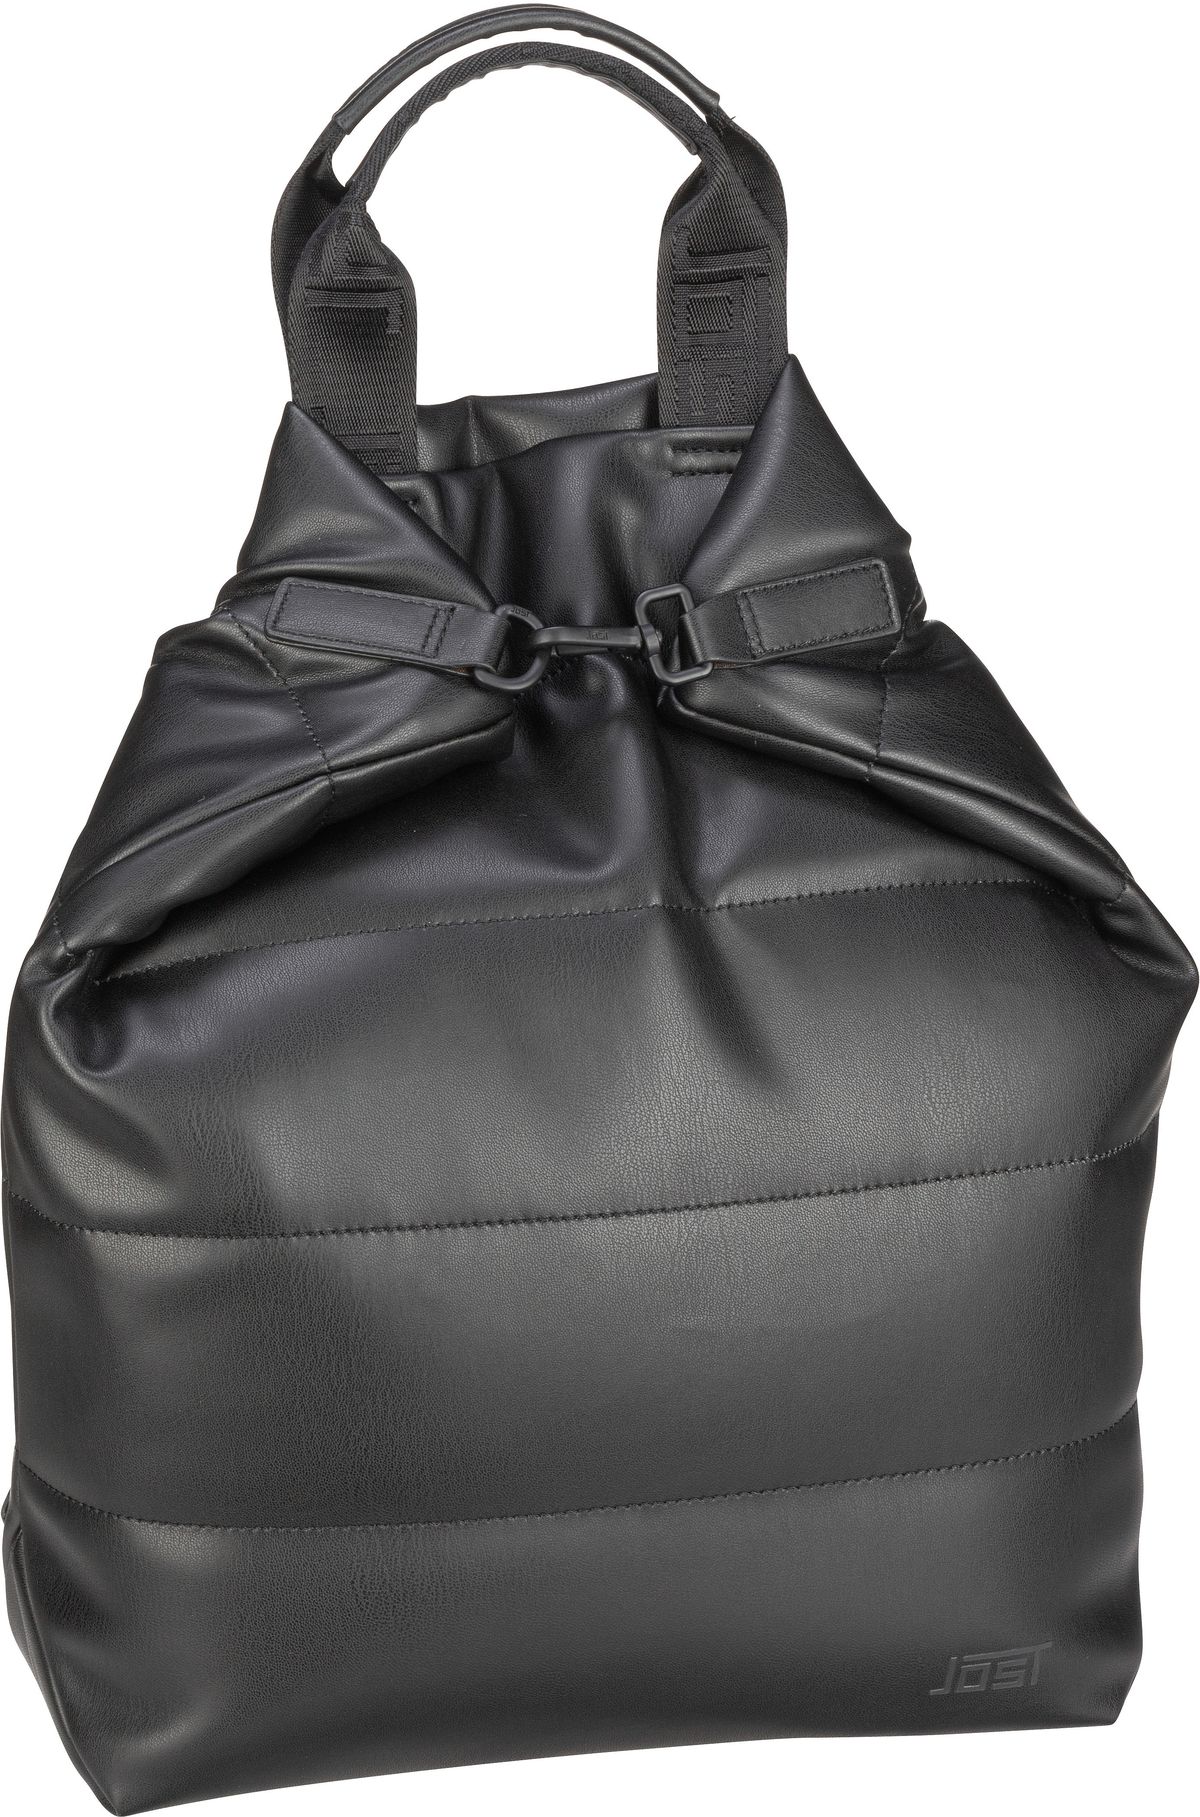 Jost Kaarina X-Change Bag S - Black